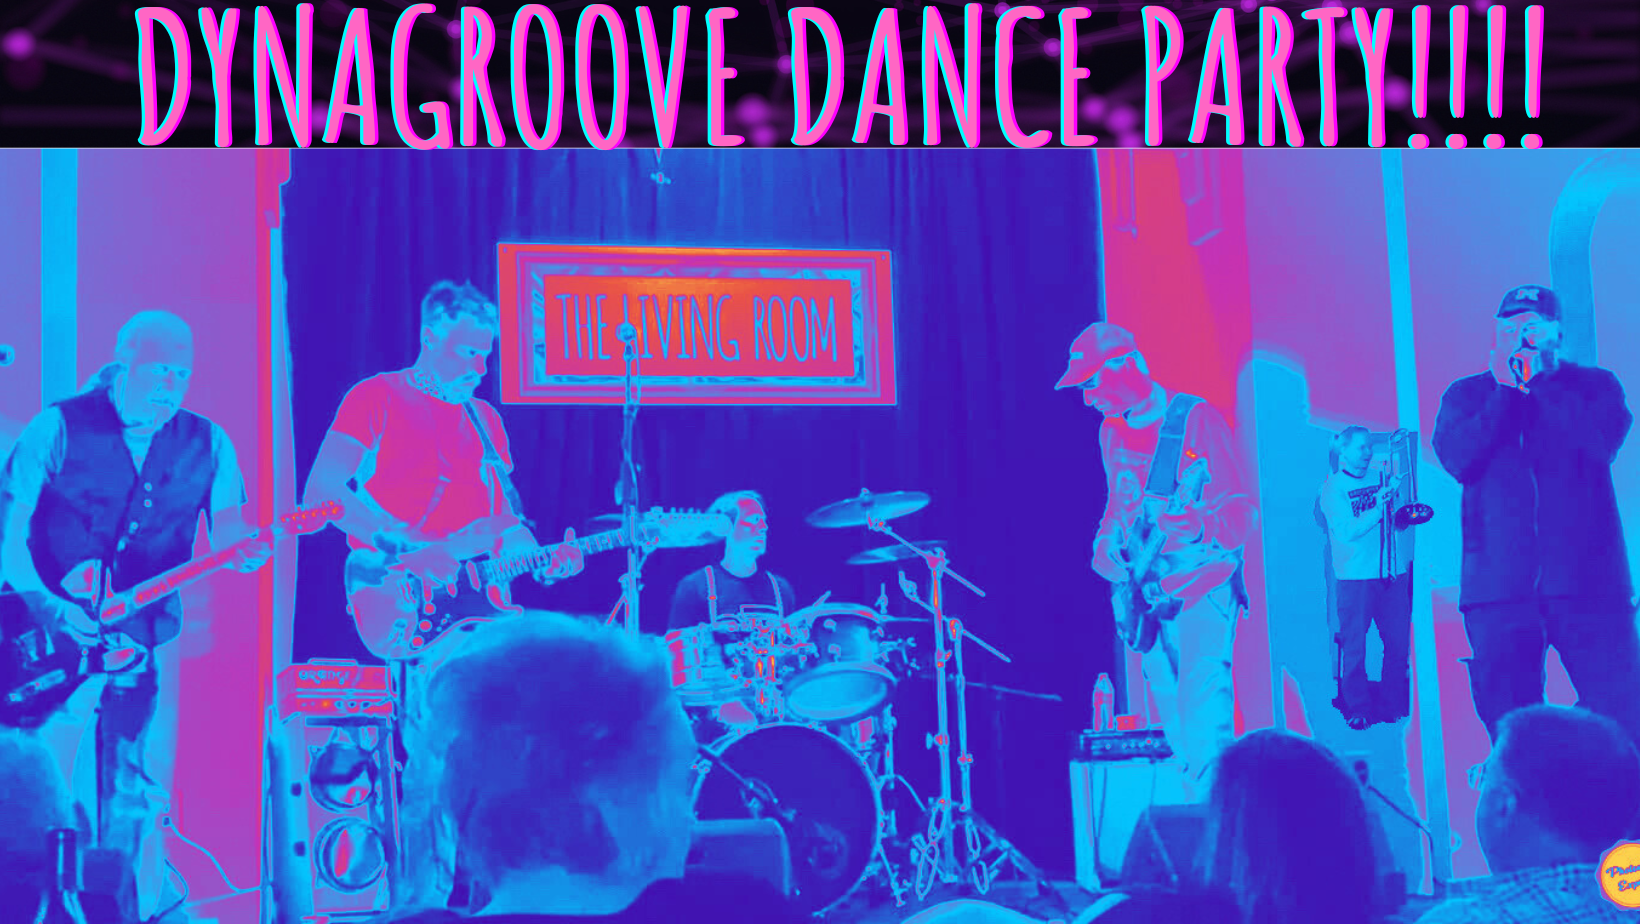 FRI. NOV. 3: DynaGroove Dance Party!